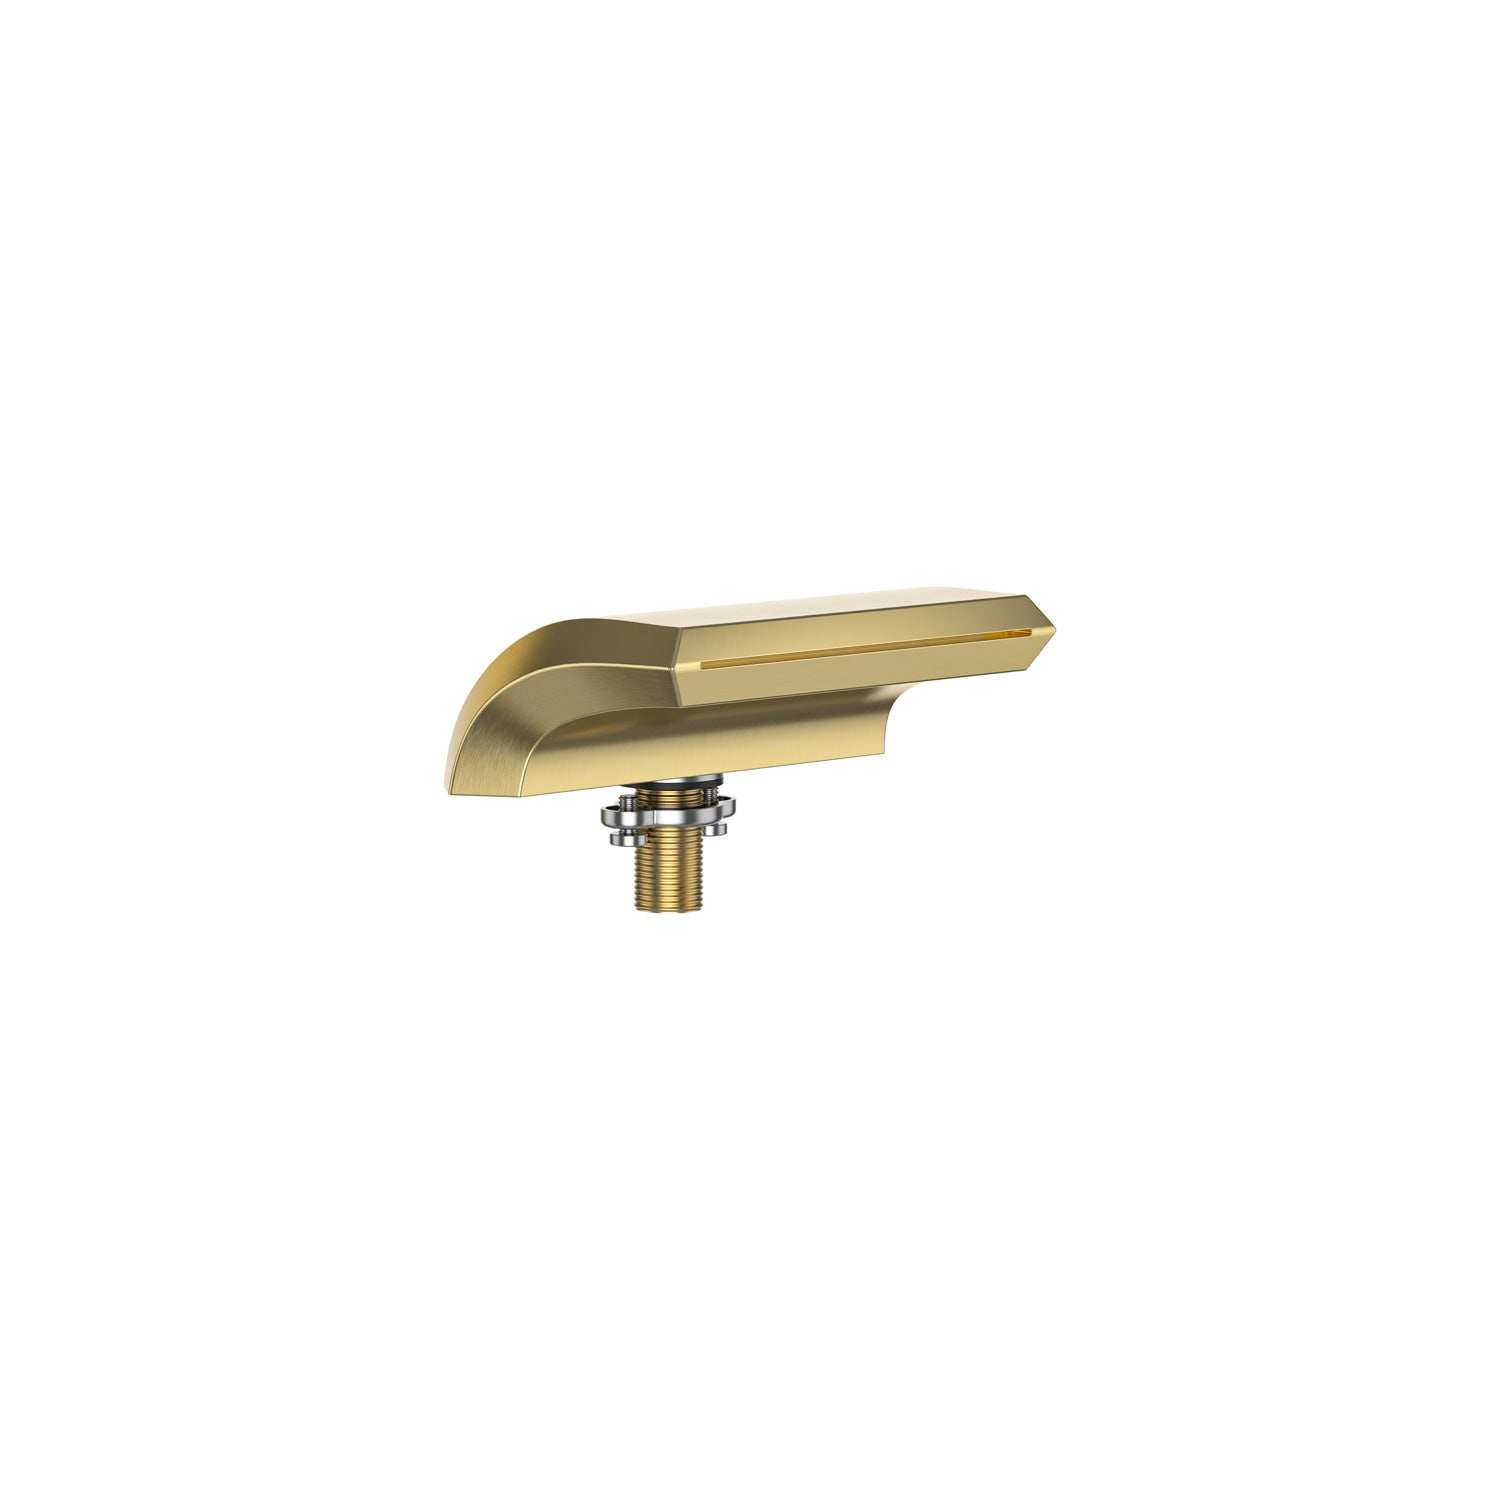 59jt408led-Brushed Gold-Bathtub Fixture